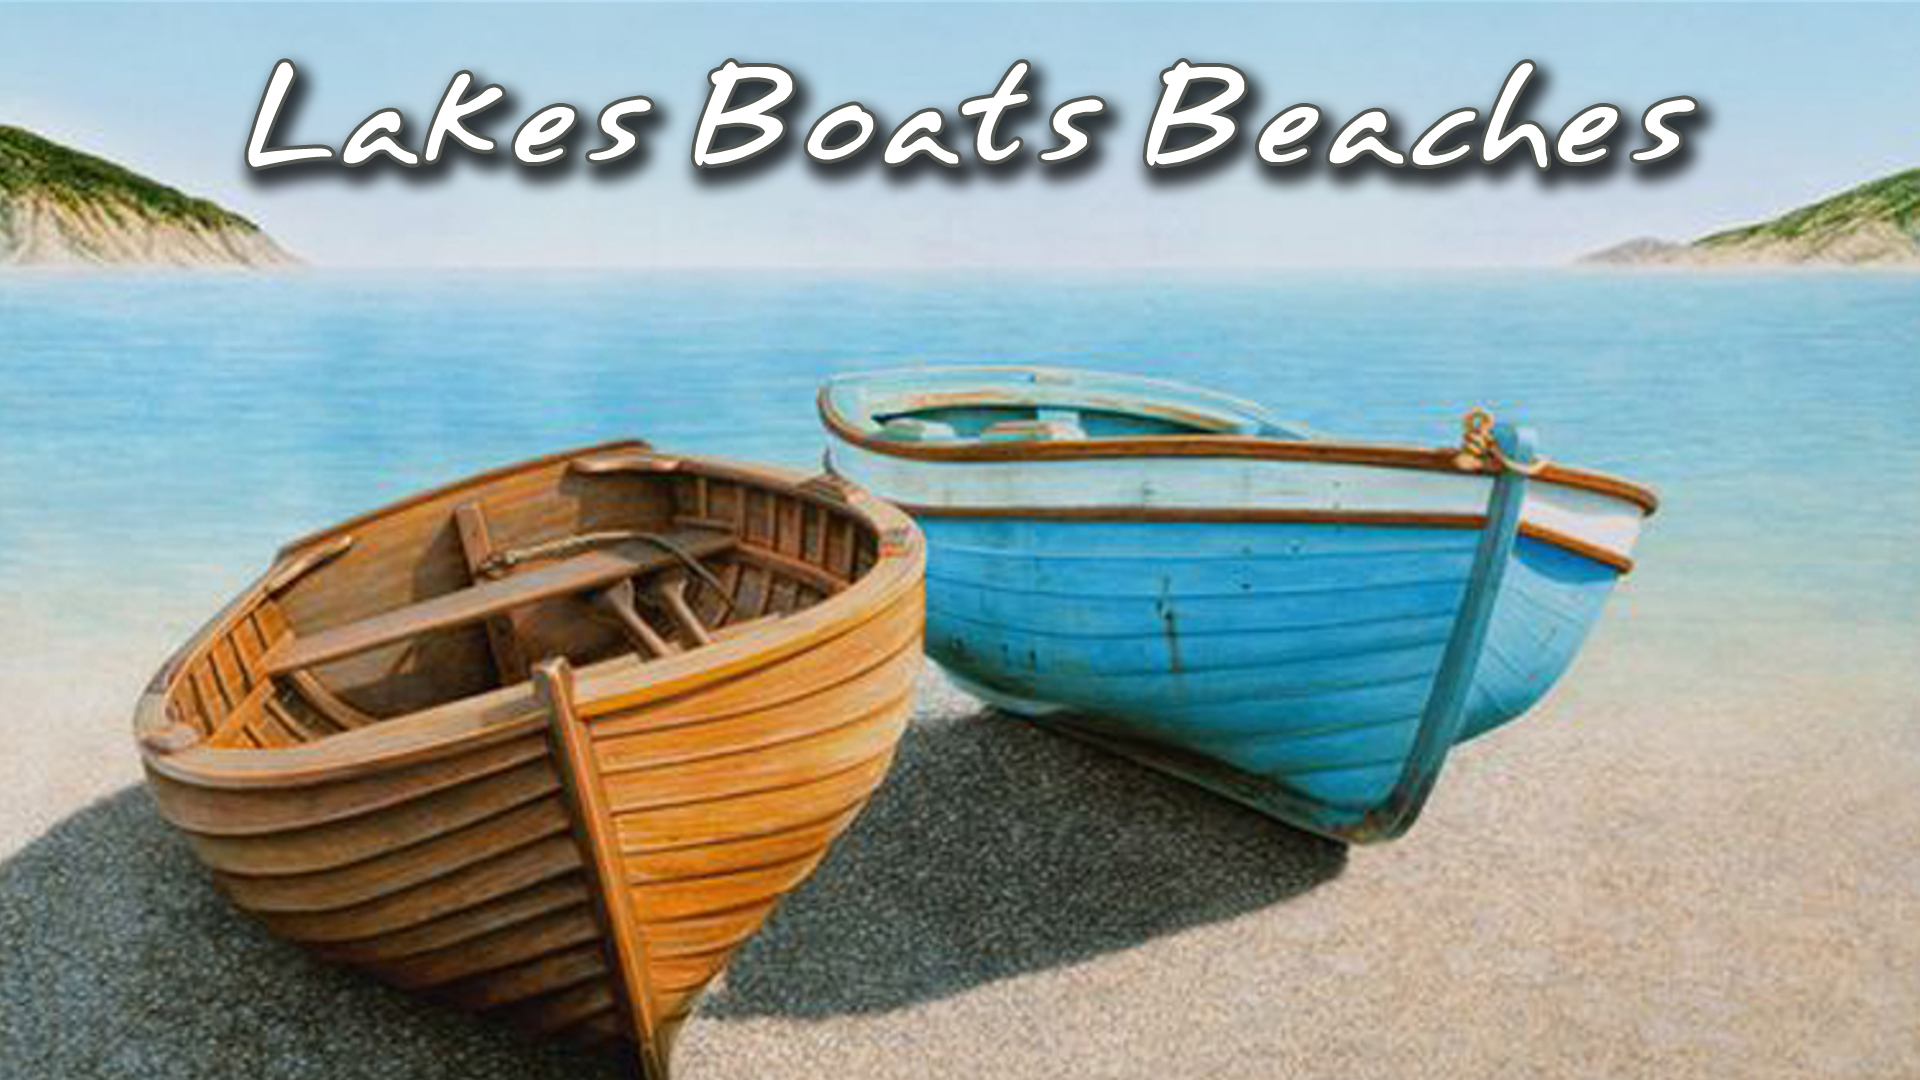 Lakes Boats Beaches  -Benefits, benefits!